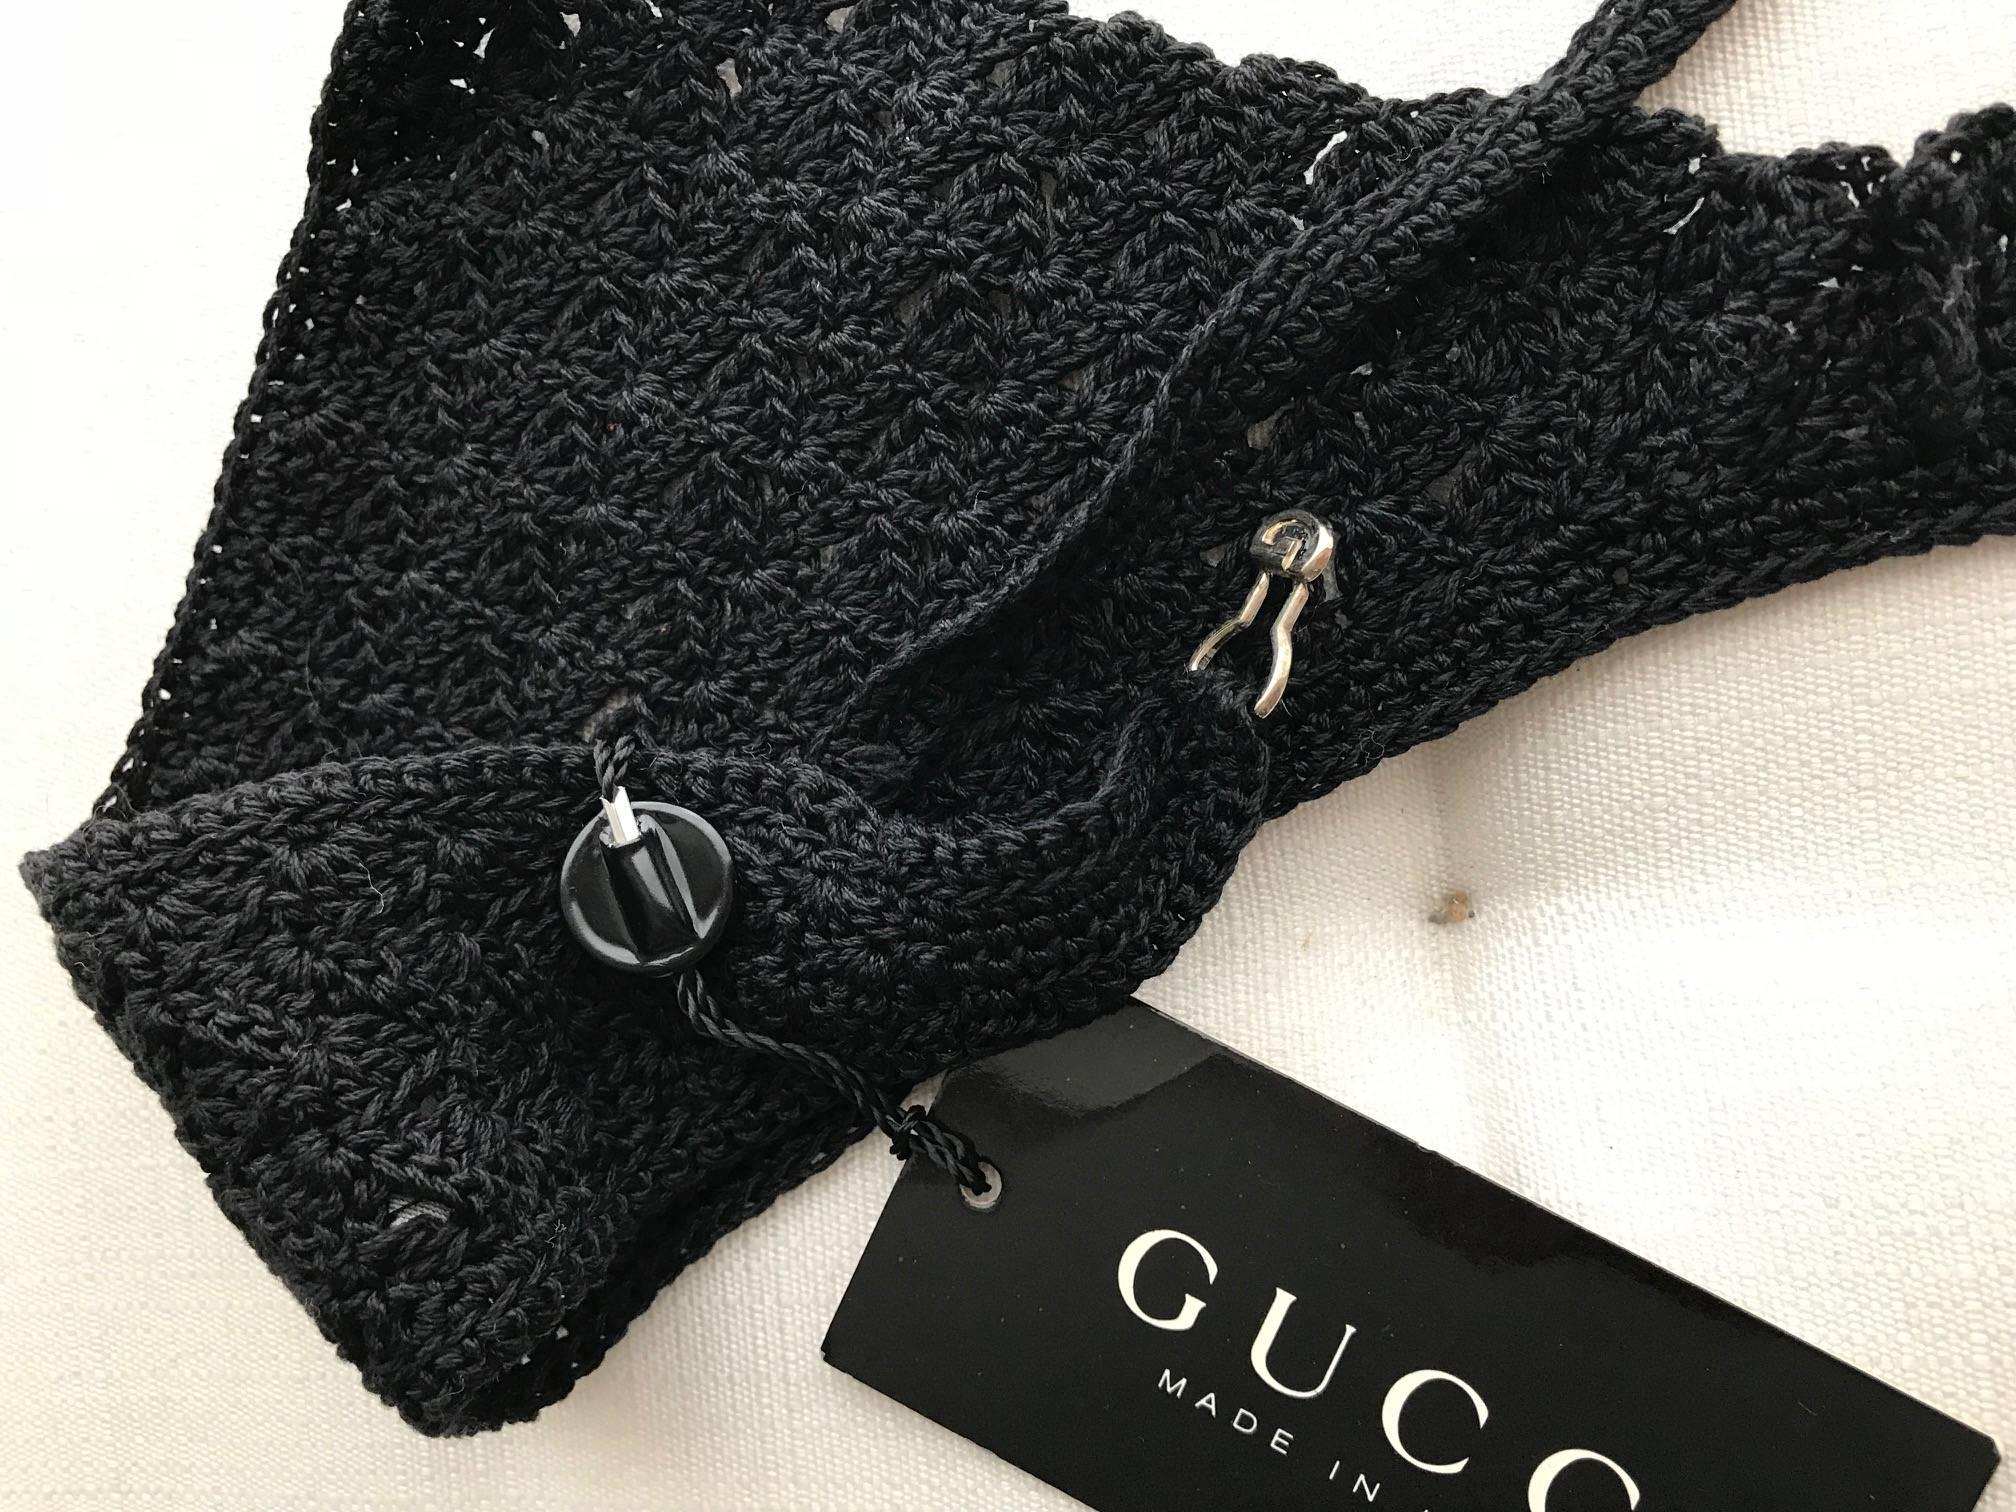 GUCCI by Tom Ford Black Crochet Knit Bra and Bikini Set 1